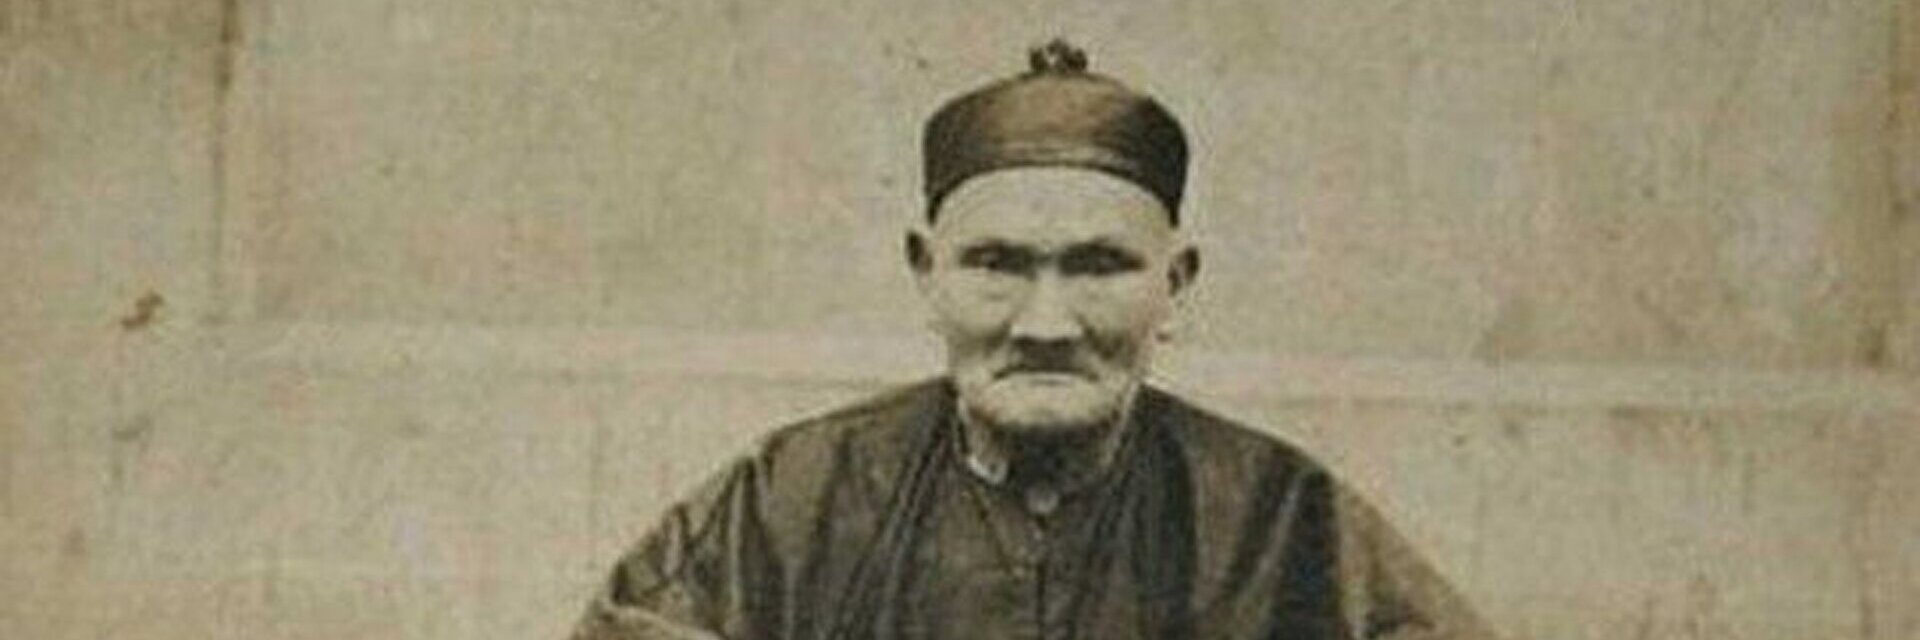 Живи 900 лет. Ли Цинъюнь (1677—1933). Ли Цинъюнь долгожитель. Ли Чинг-Юн долгожитель. Ли Цинъюнь 256 лет.